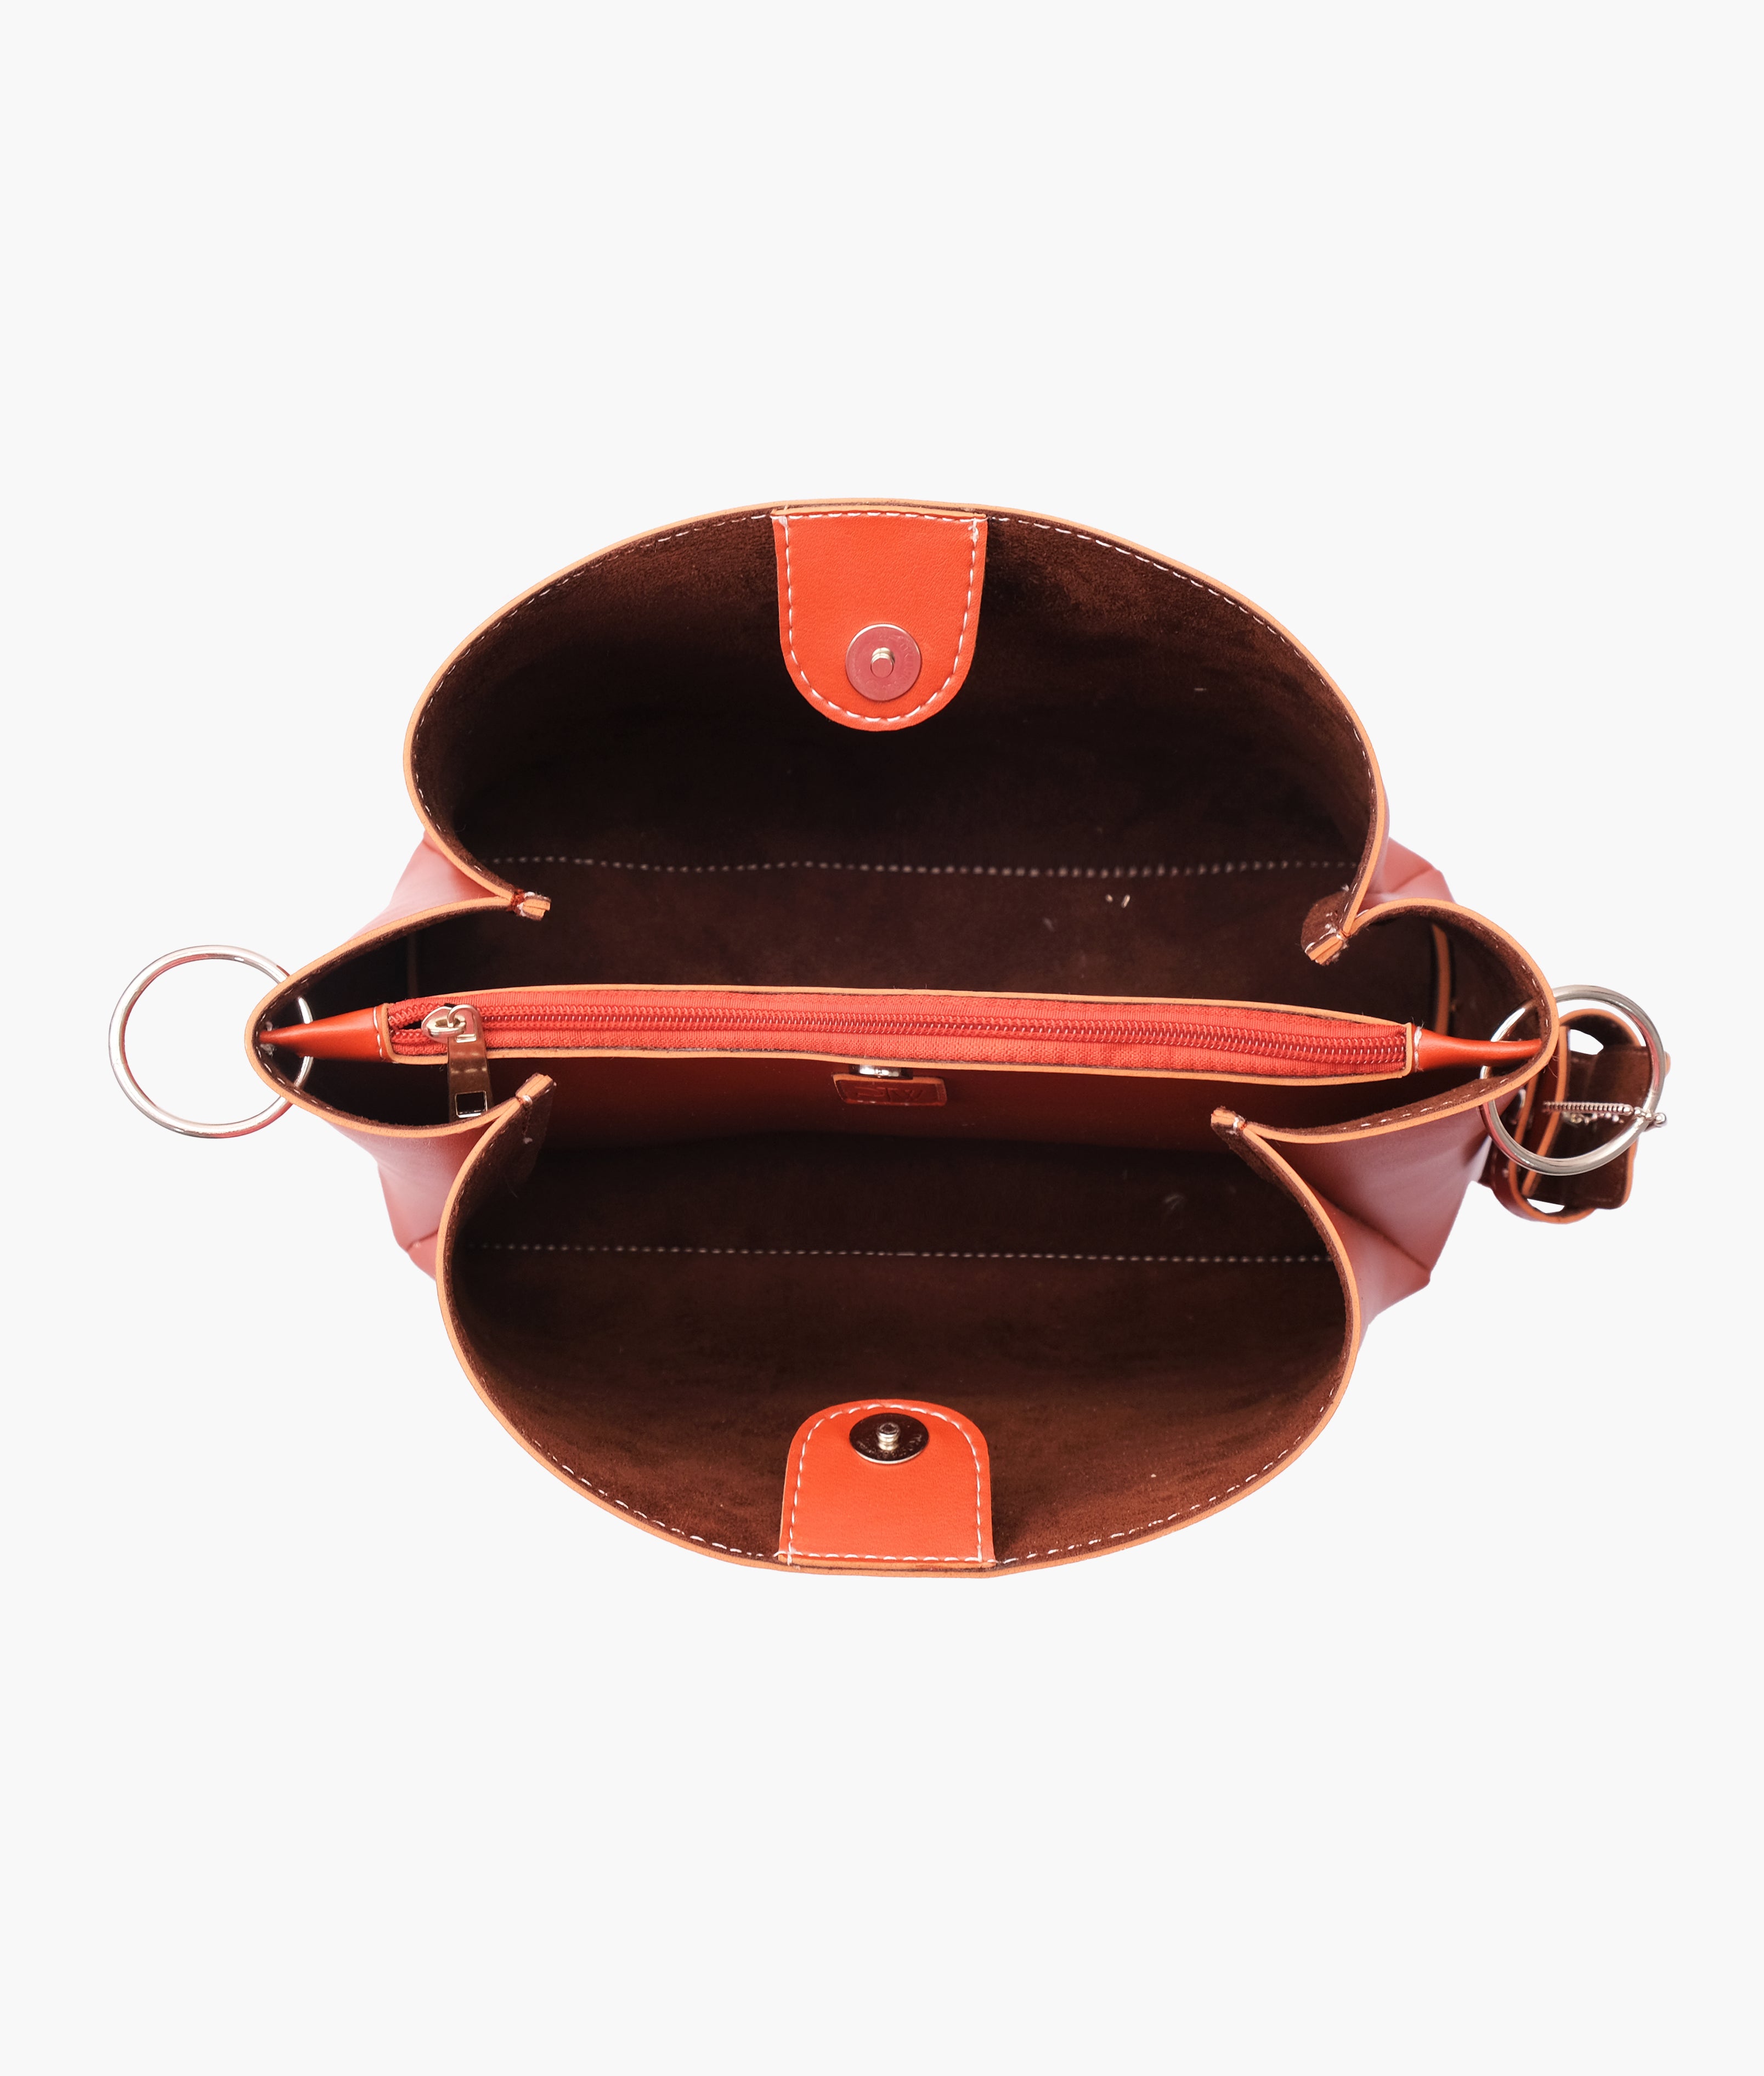 Rust handbag with braided handle